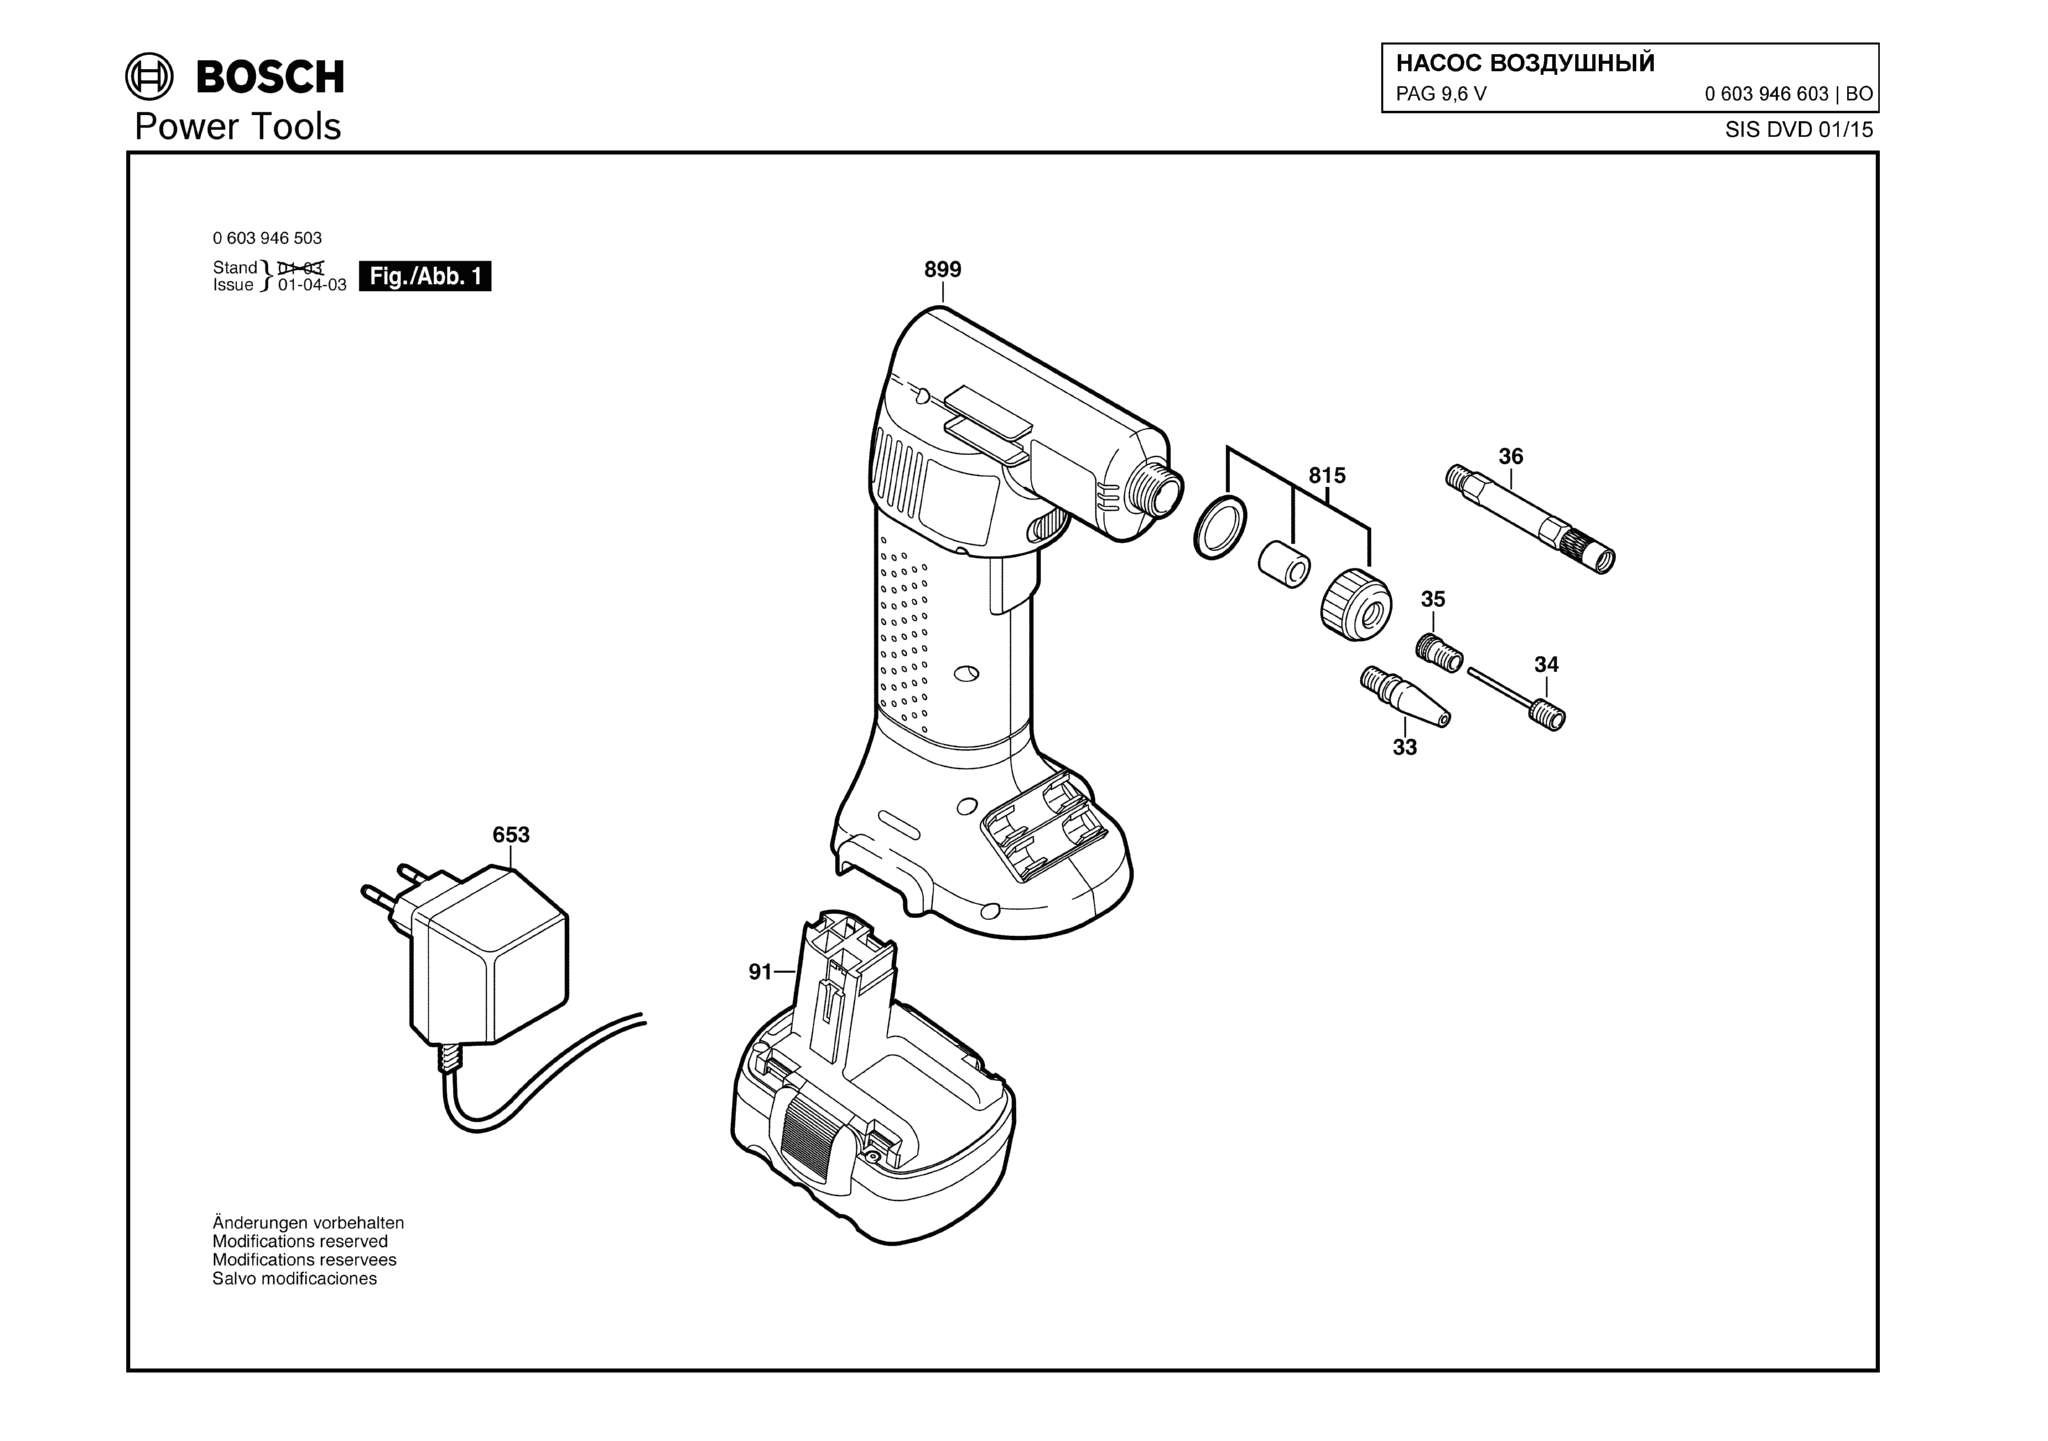 Запчасти, схема и деталировка Bosch PAG 9,6 V (ТИП 0603946603)